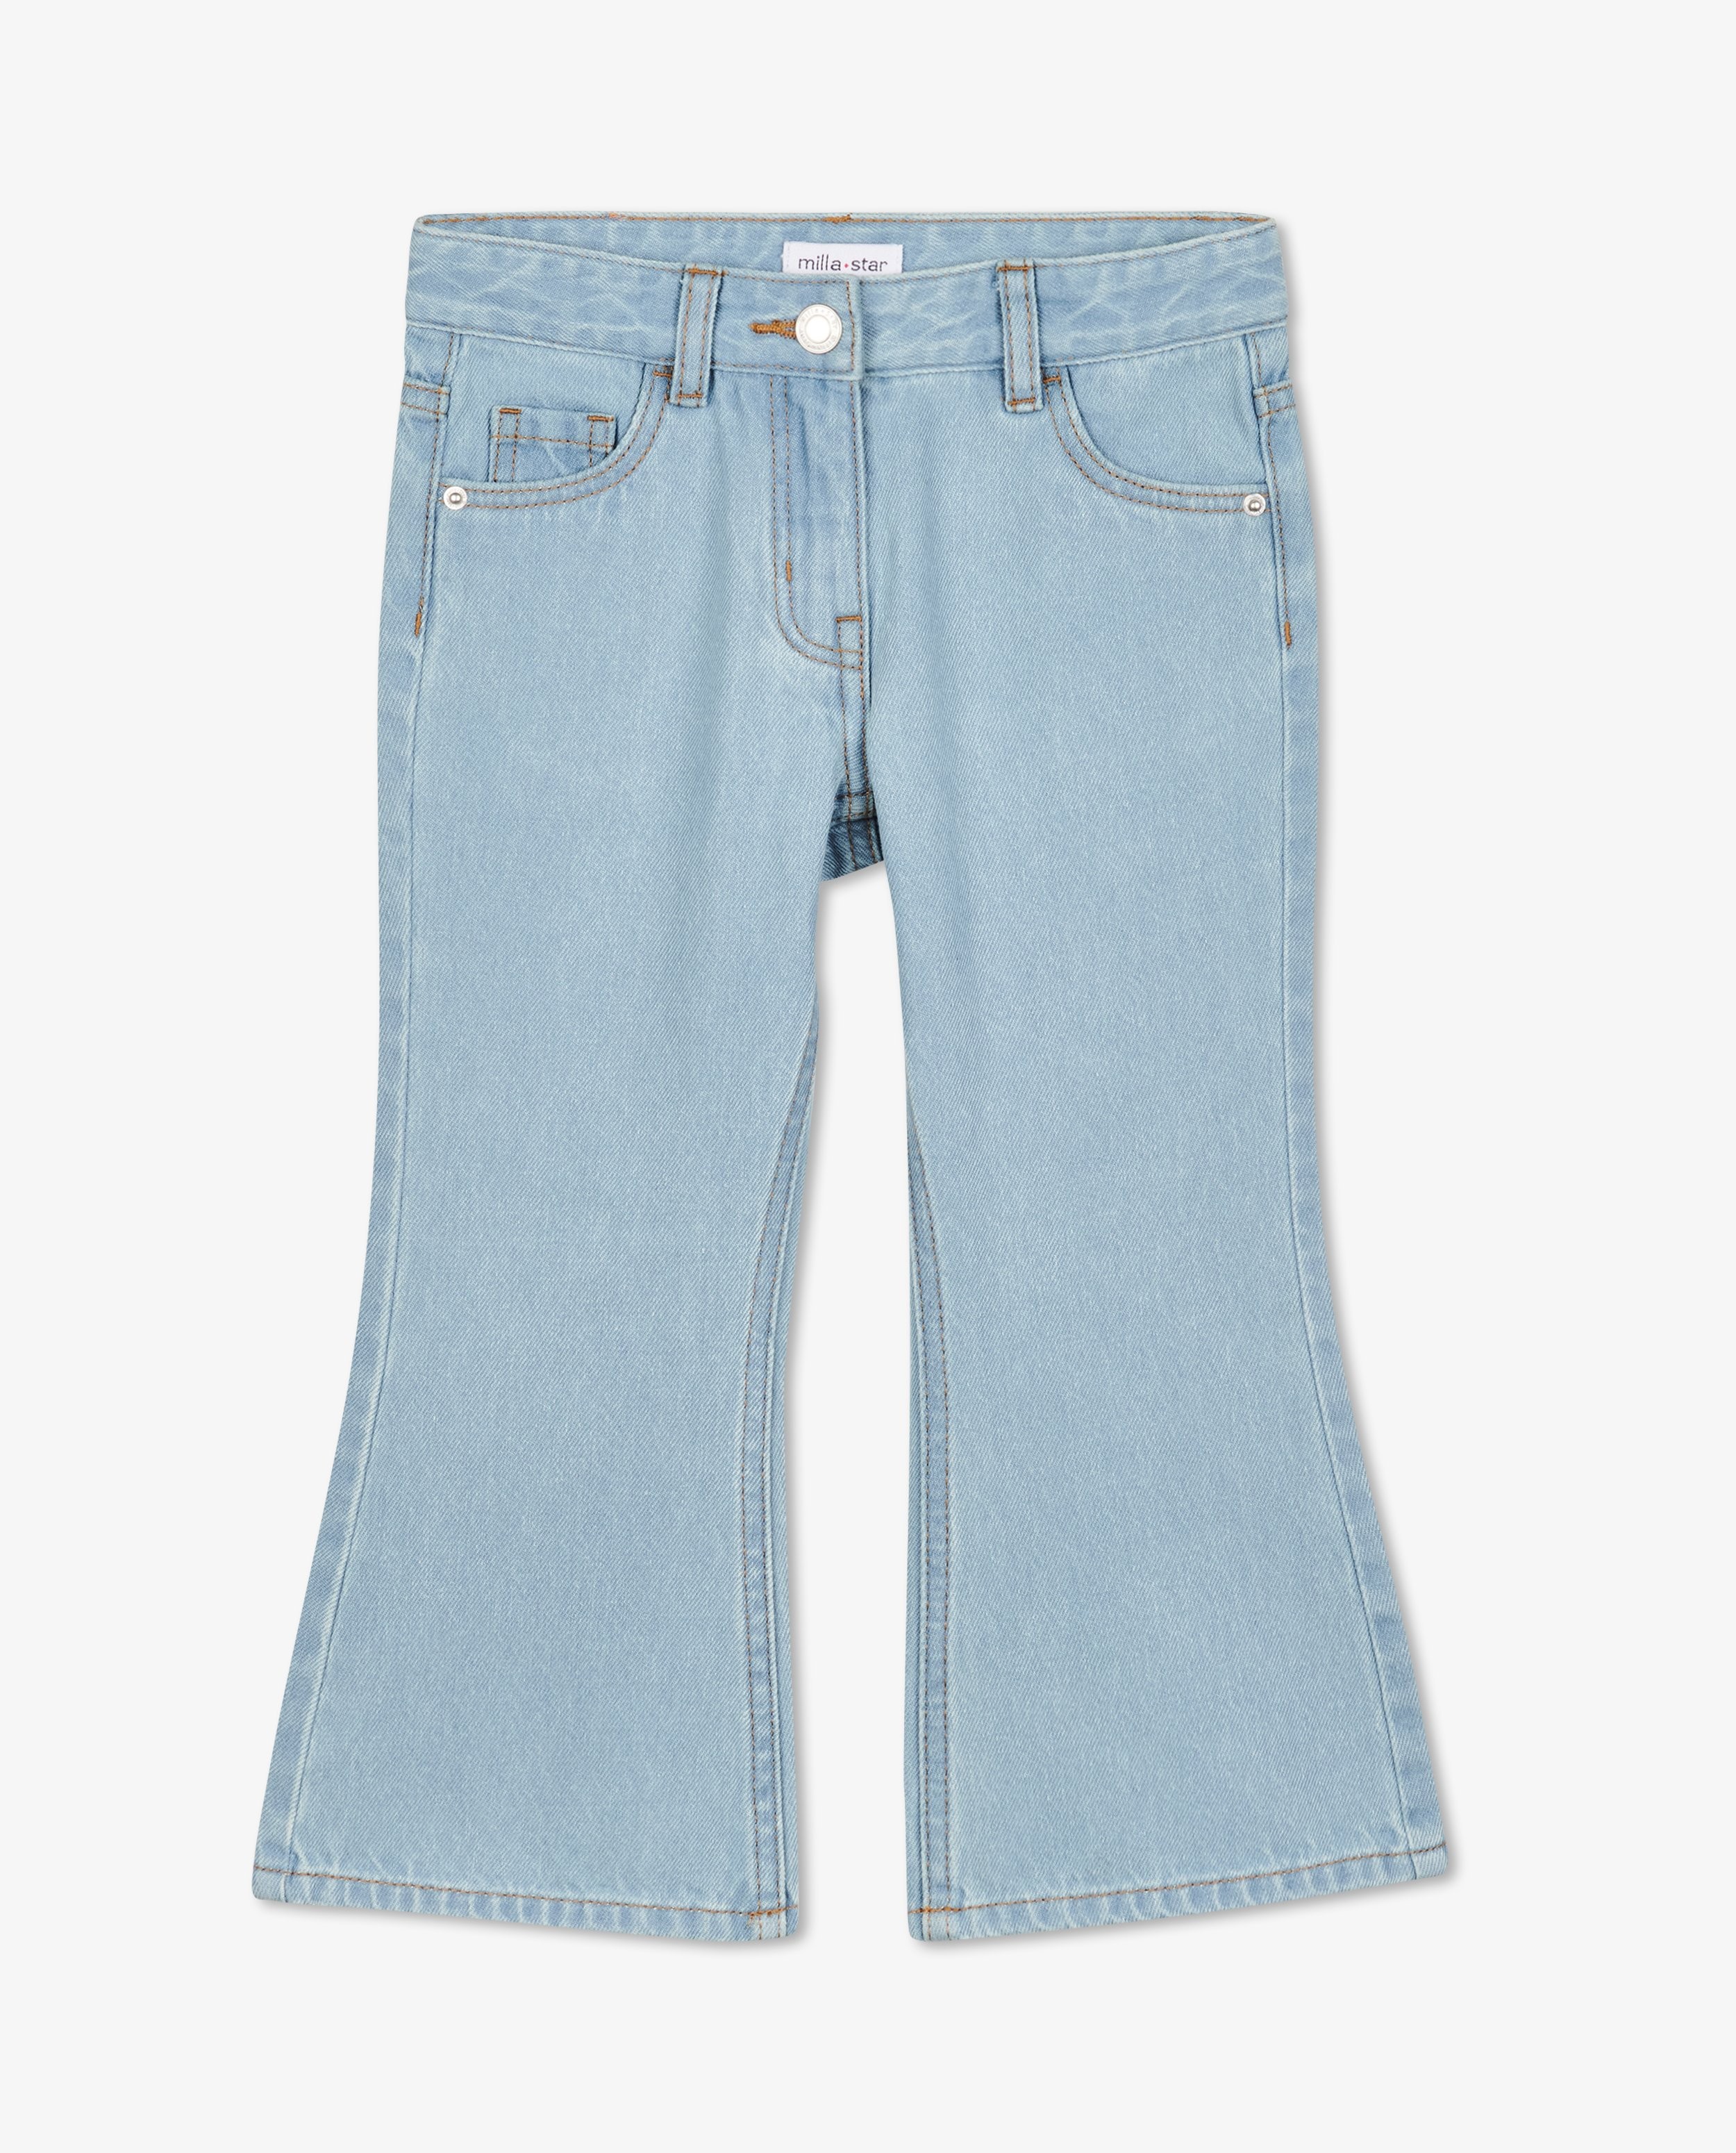 Jeans - Jeans bleu clair, bootcut